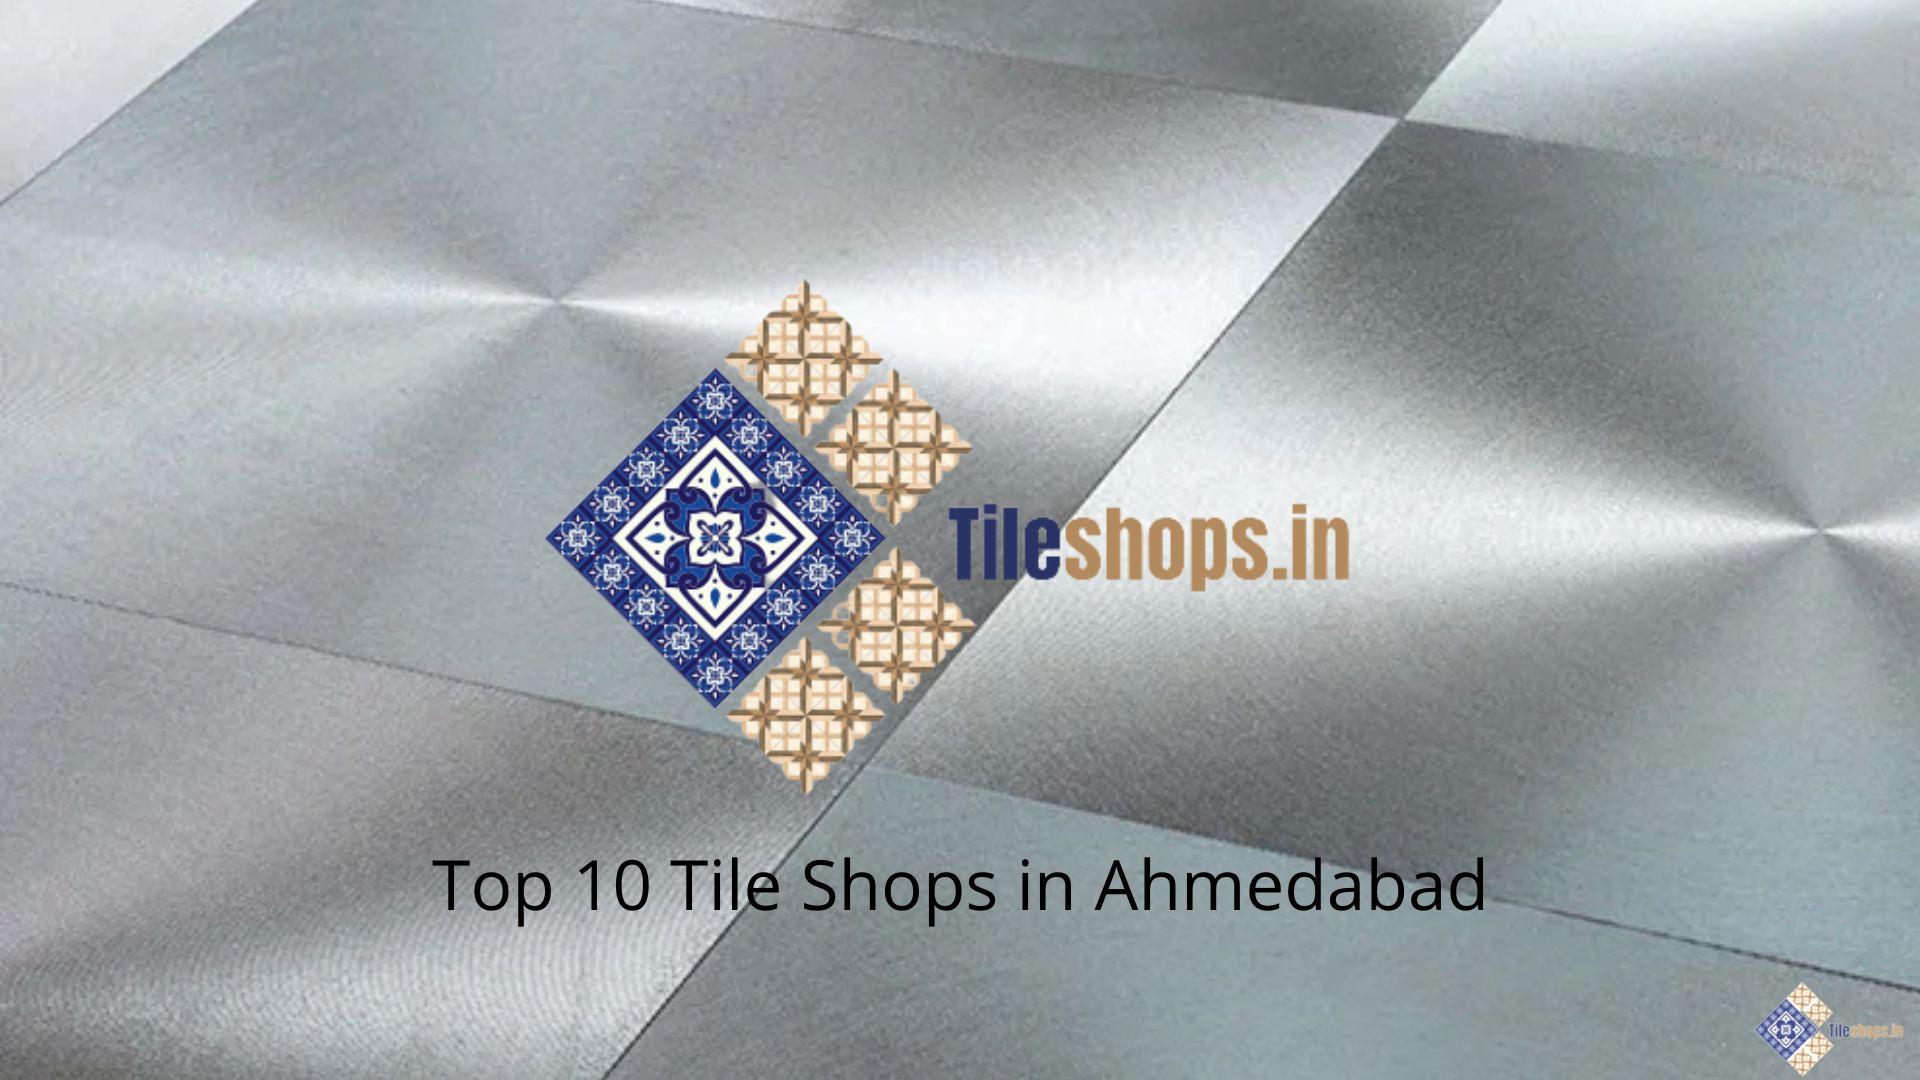 Top 10 Tile Shops in Ahmedabad